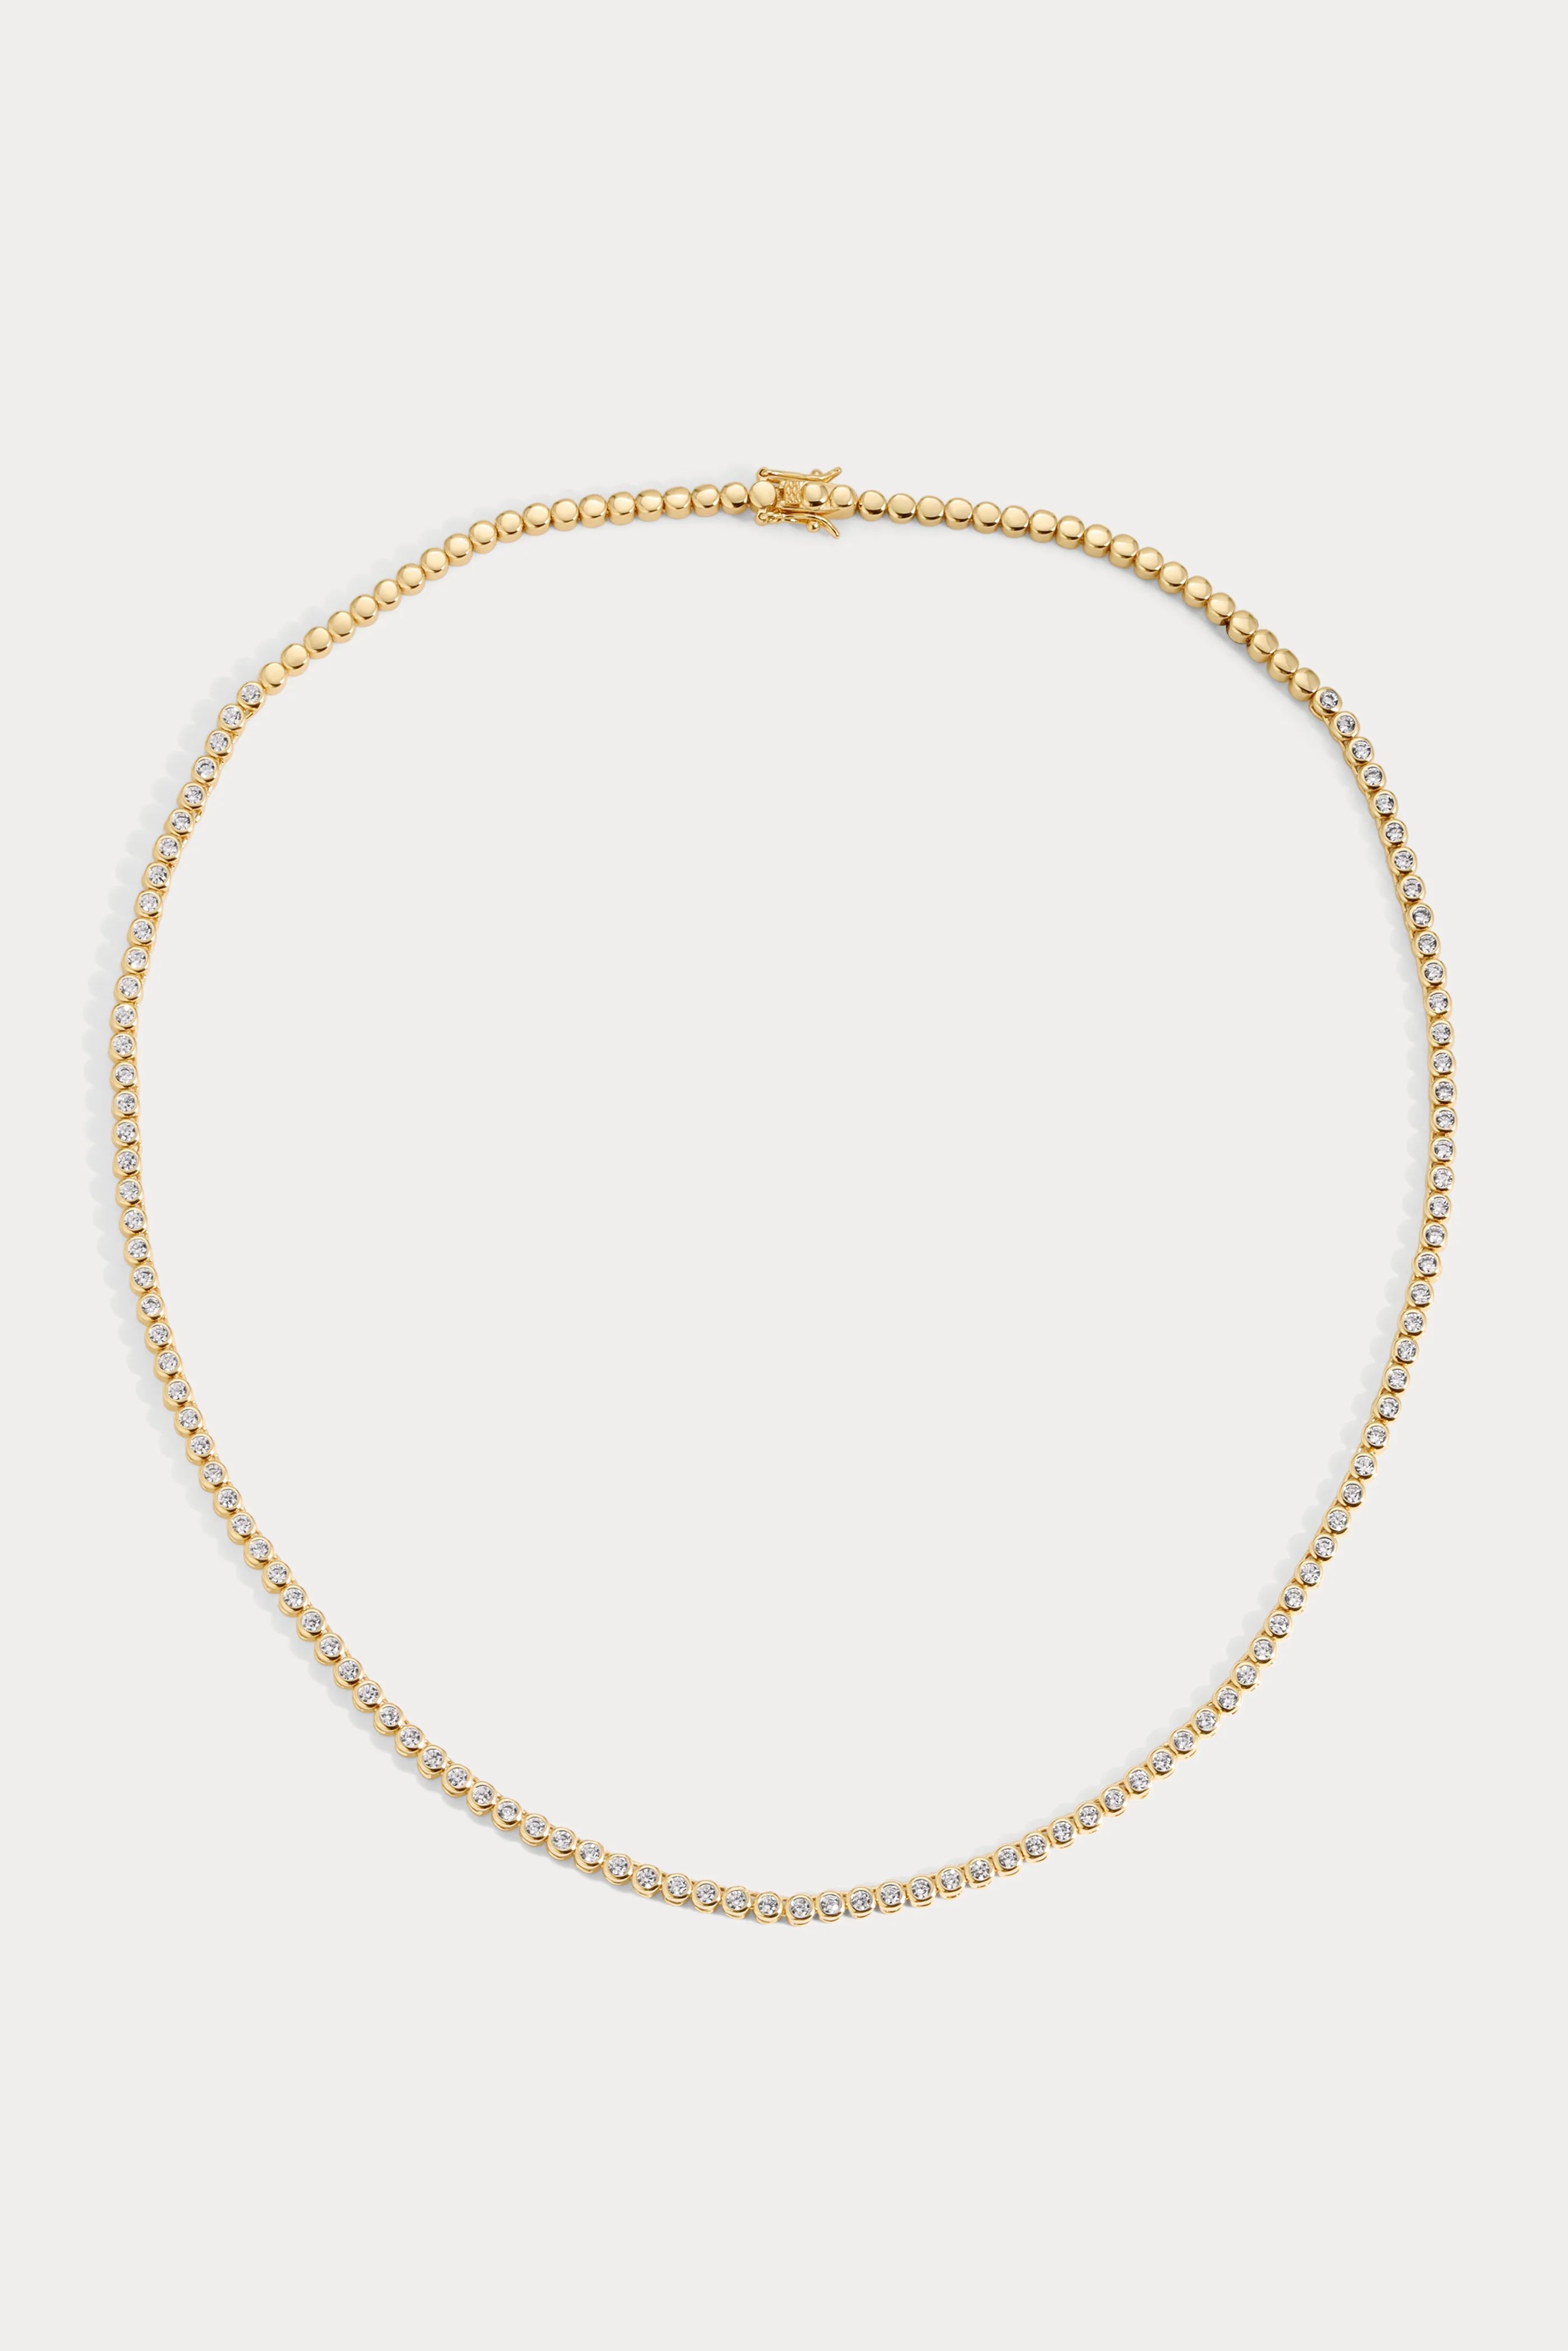 Mini Reese Tennis Necklace | Lili Claspe